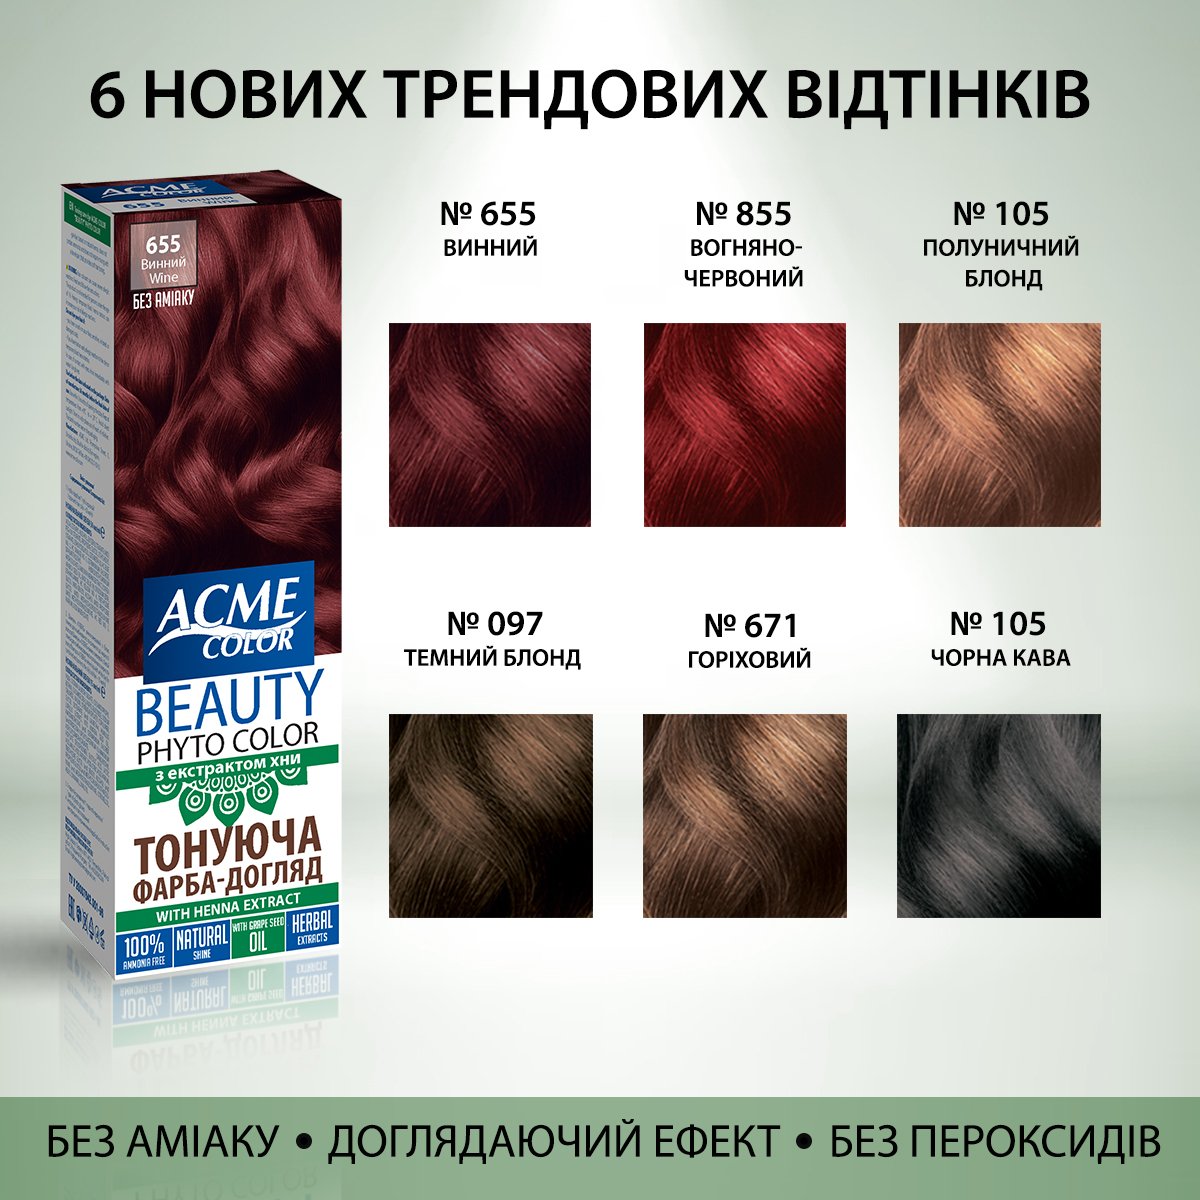 Гель-фарба Acme Color Beauty Phyto Color, відтінок 655, винний, 60 мл - фото 5